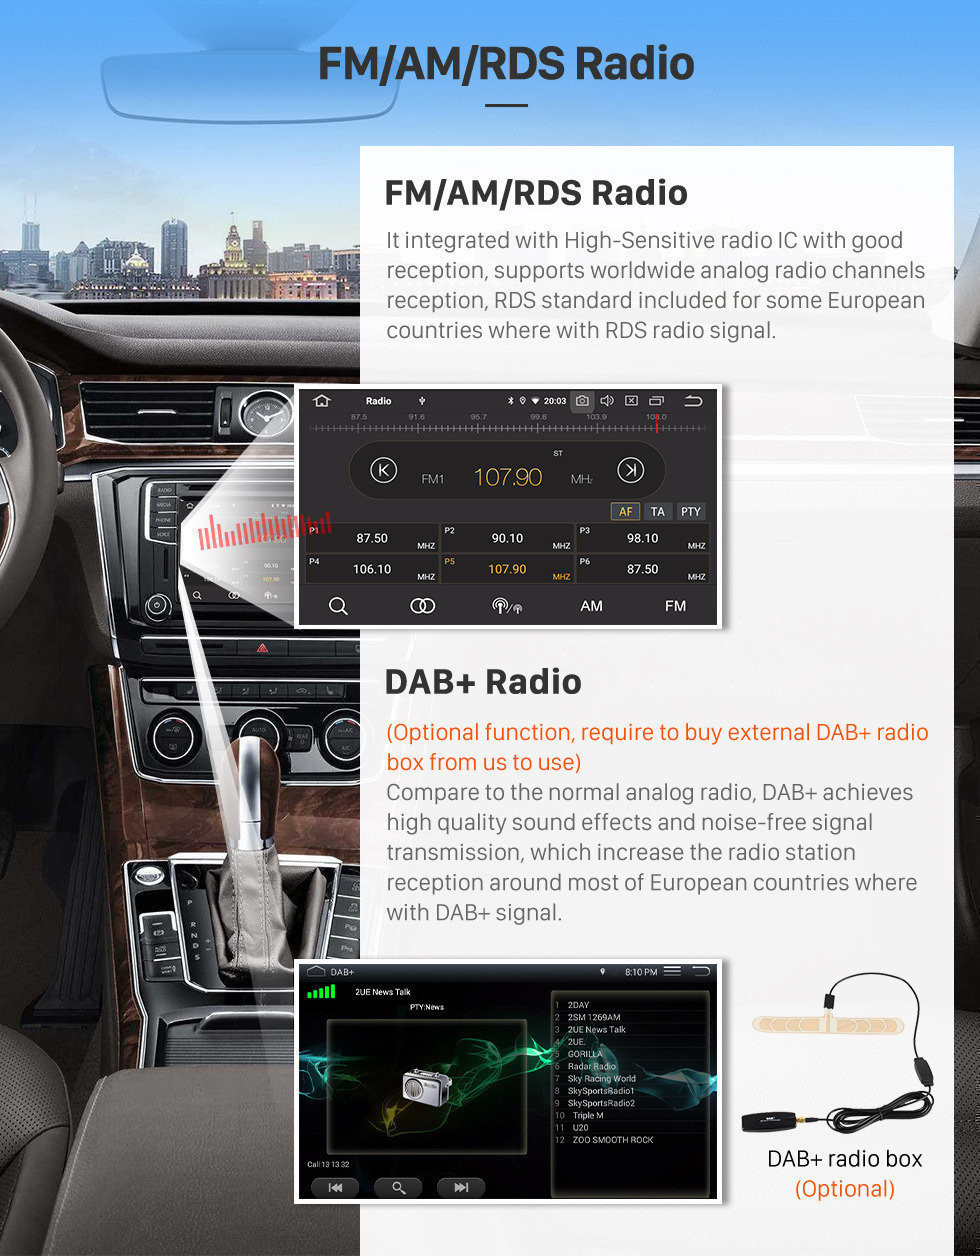 Seicane 2016 2017 2018 Suzuki BREZZA 9 pulgadas IPS con pantalla táctil Android 11.0 Radio GPS Navegación Control del volante Estéreo automático con Bluetooth Wifi Soporte USB Carplay DVD Player 4G DVR